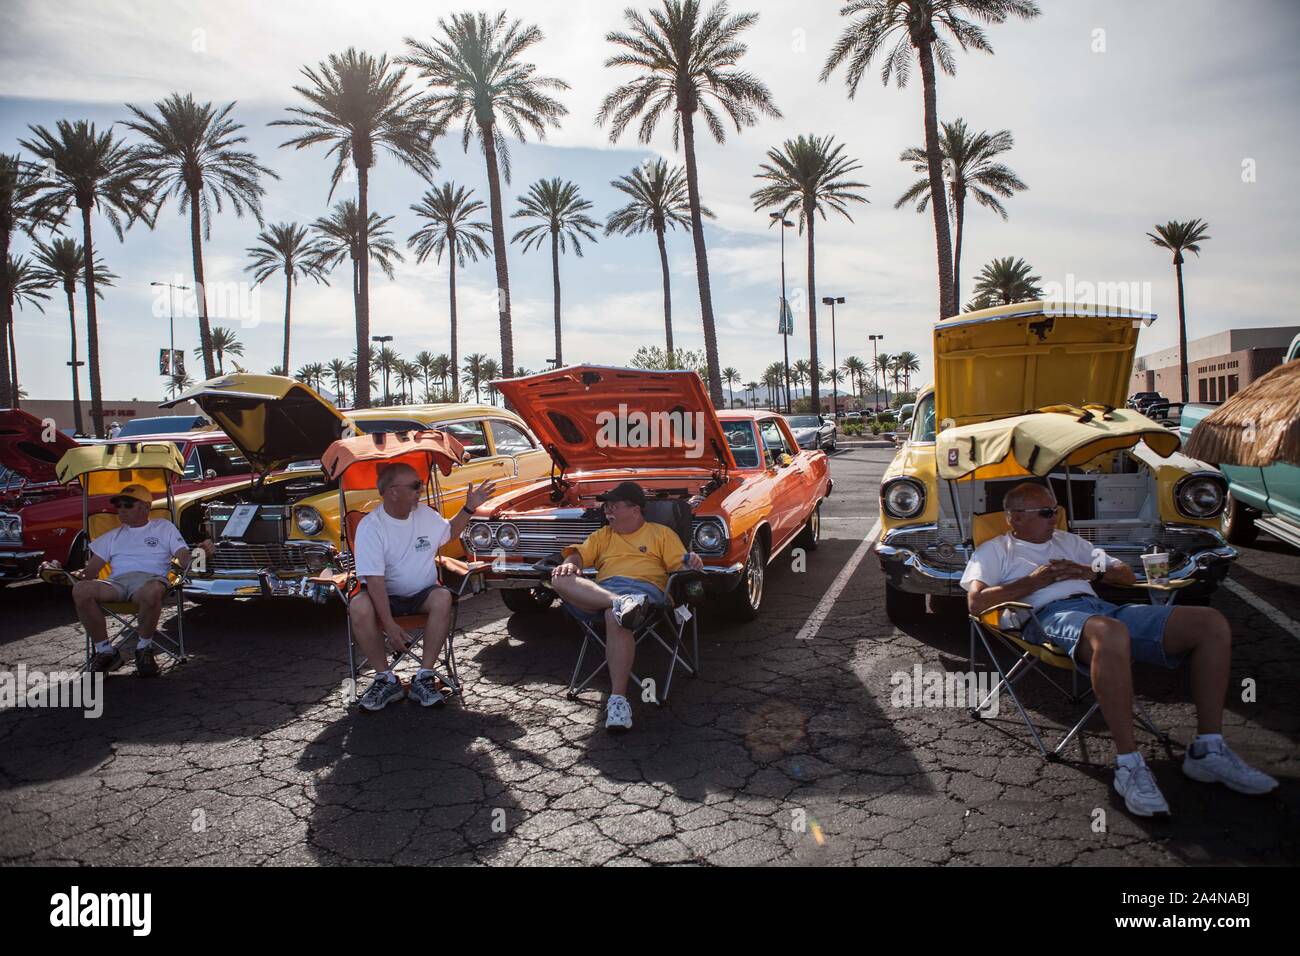 Display of classic cars in a mall in Scottsdale and Phoenix Arizona. Old cars. TEOE through each other's eyes.....Exhibición de autos clásicos en algú Stock Photo